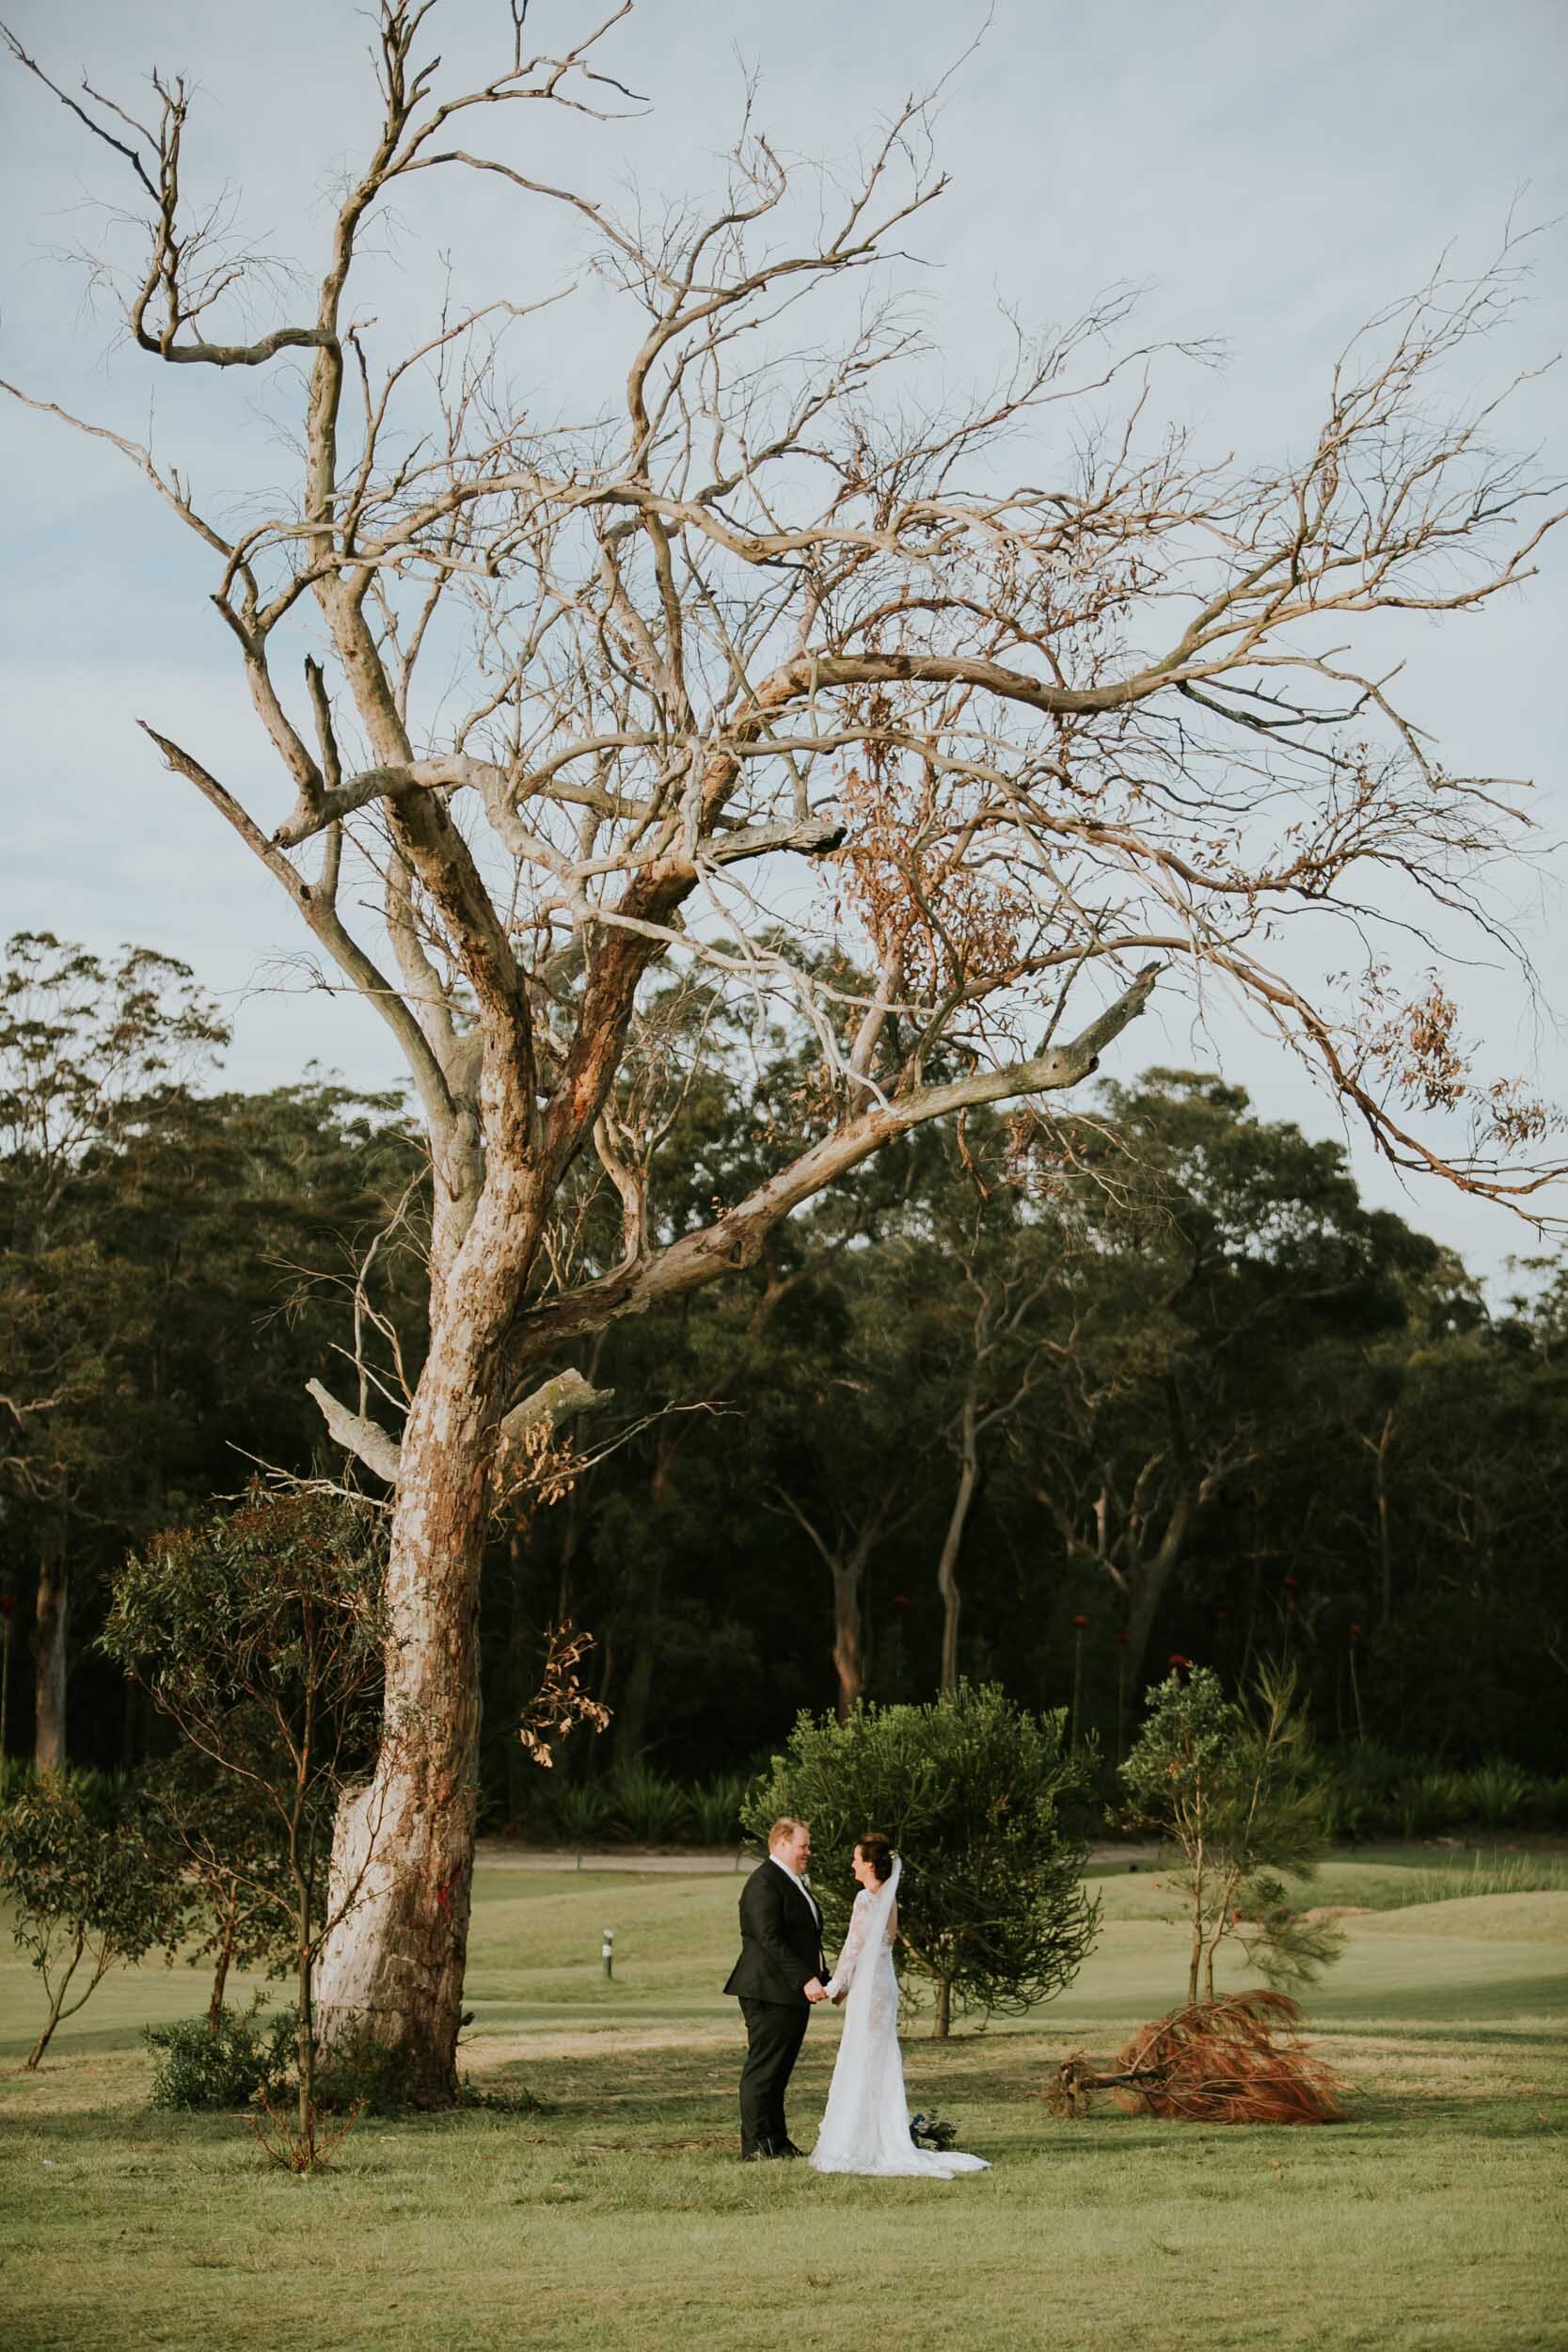 Wedding photographer Sutherland Shire, Sydney, Illawarra